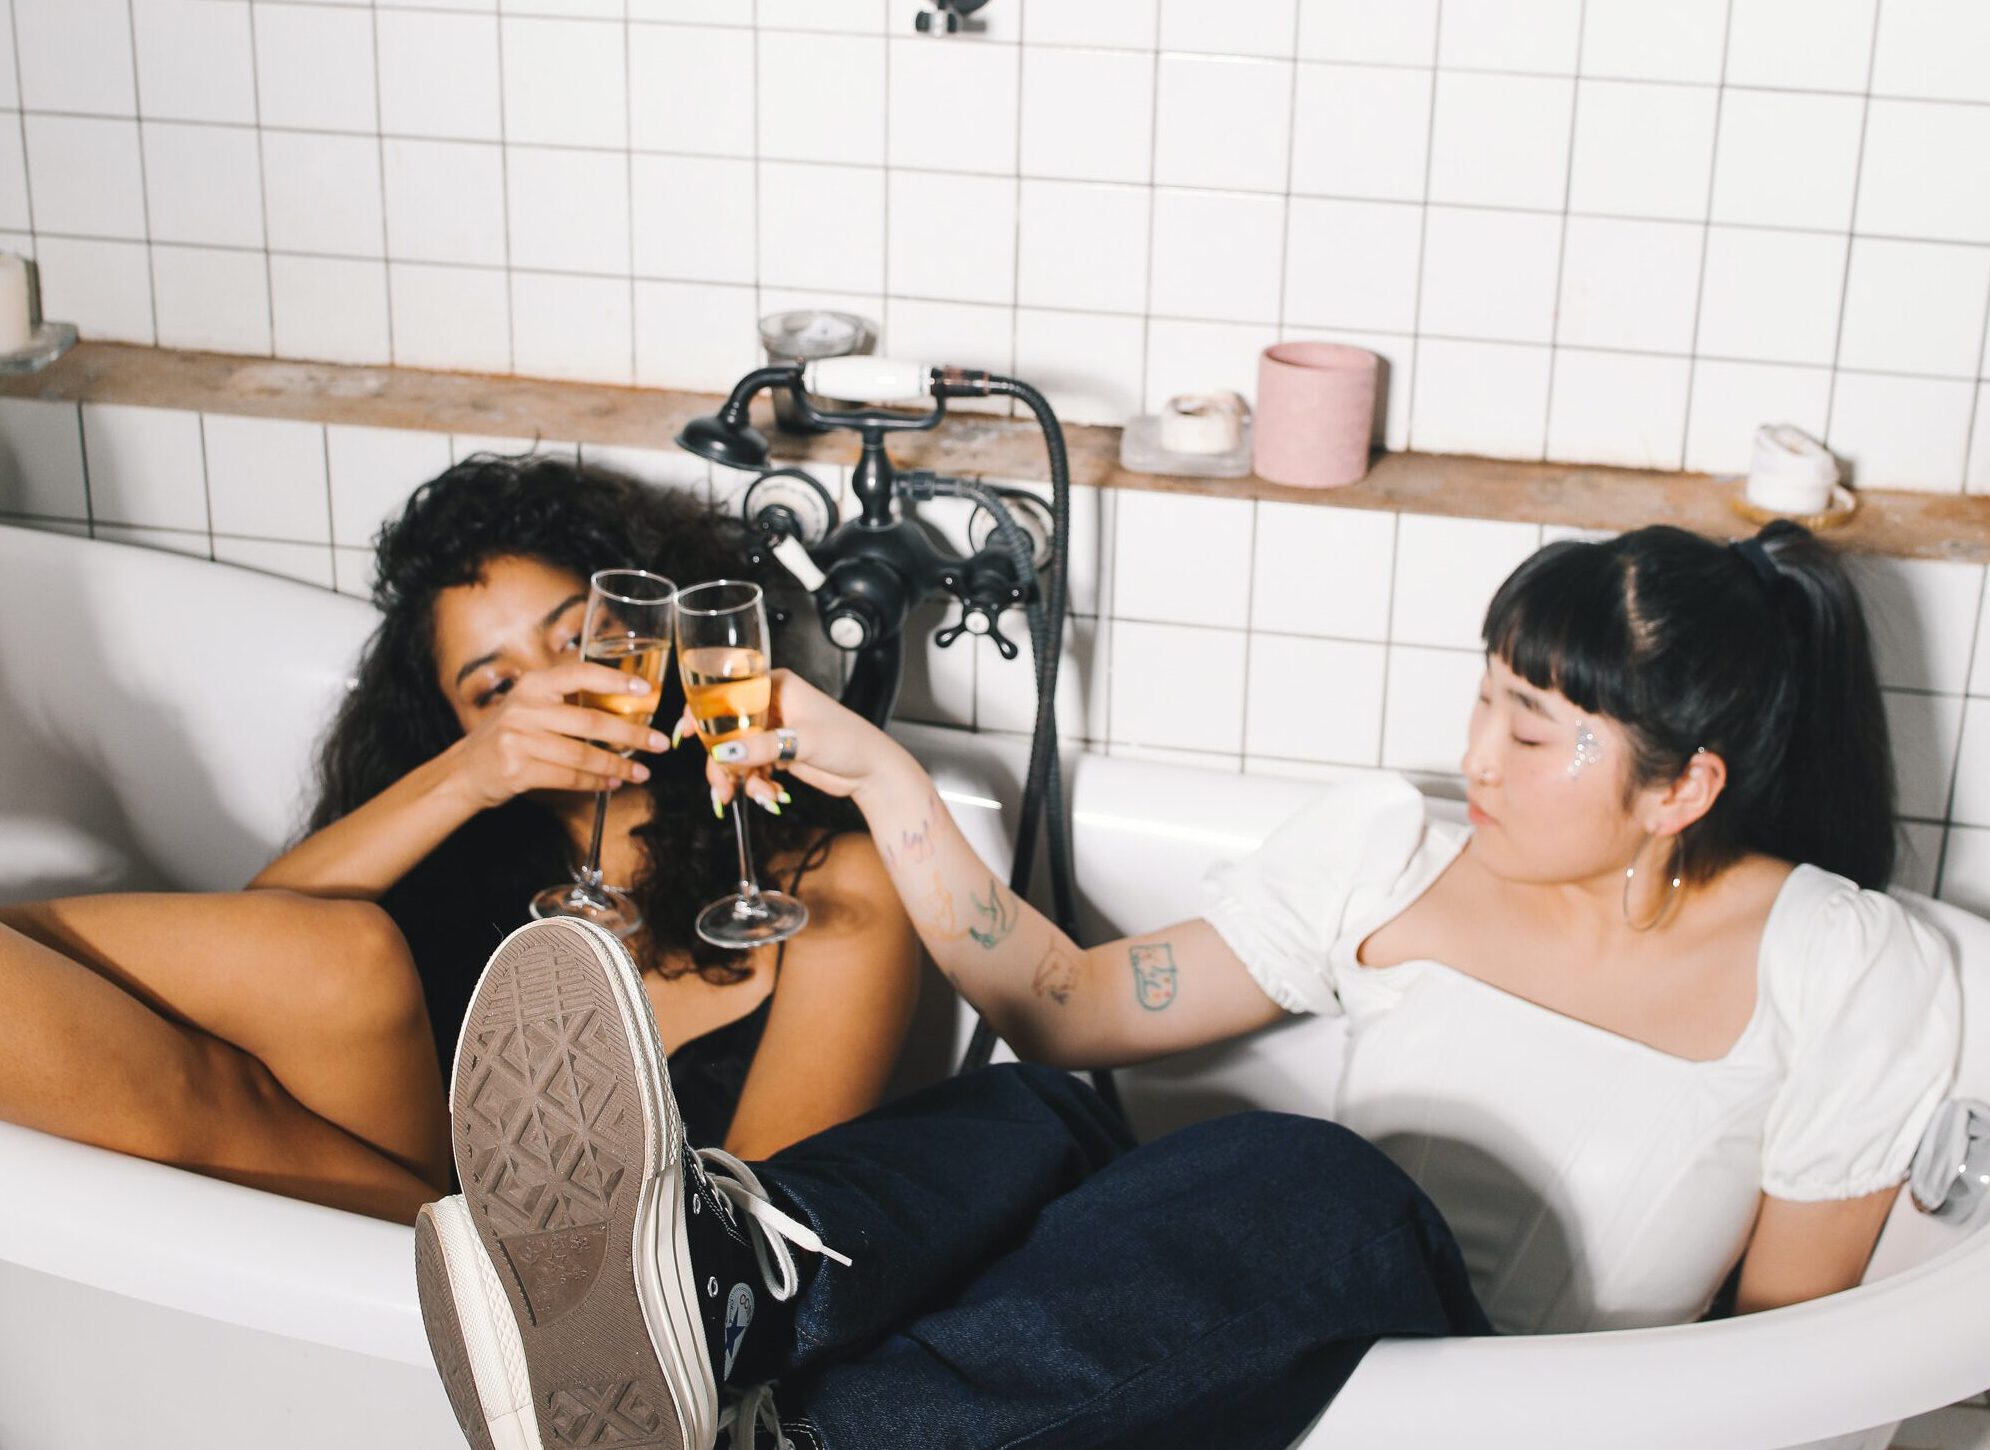 twee vrouwen in bad met champagne